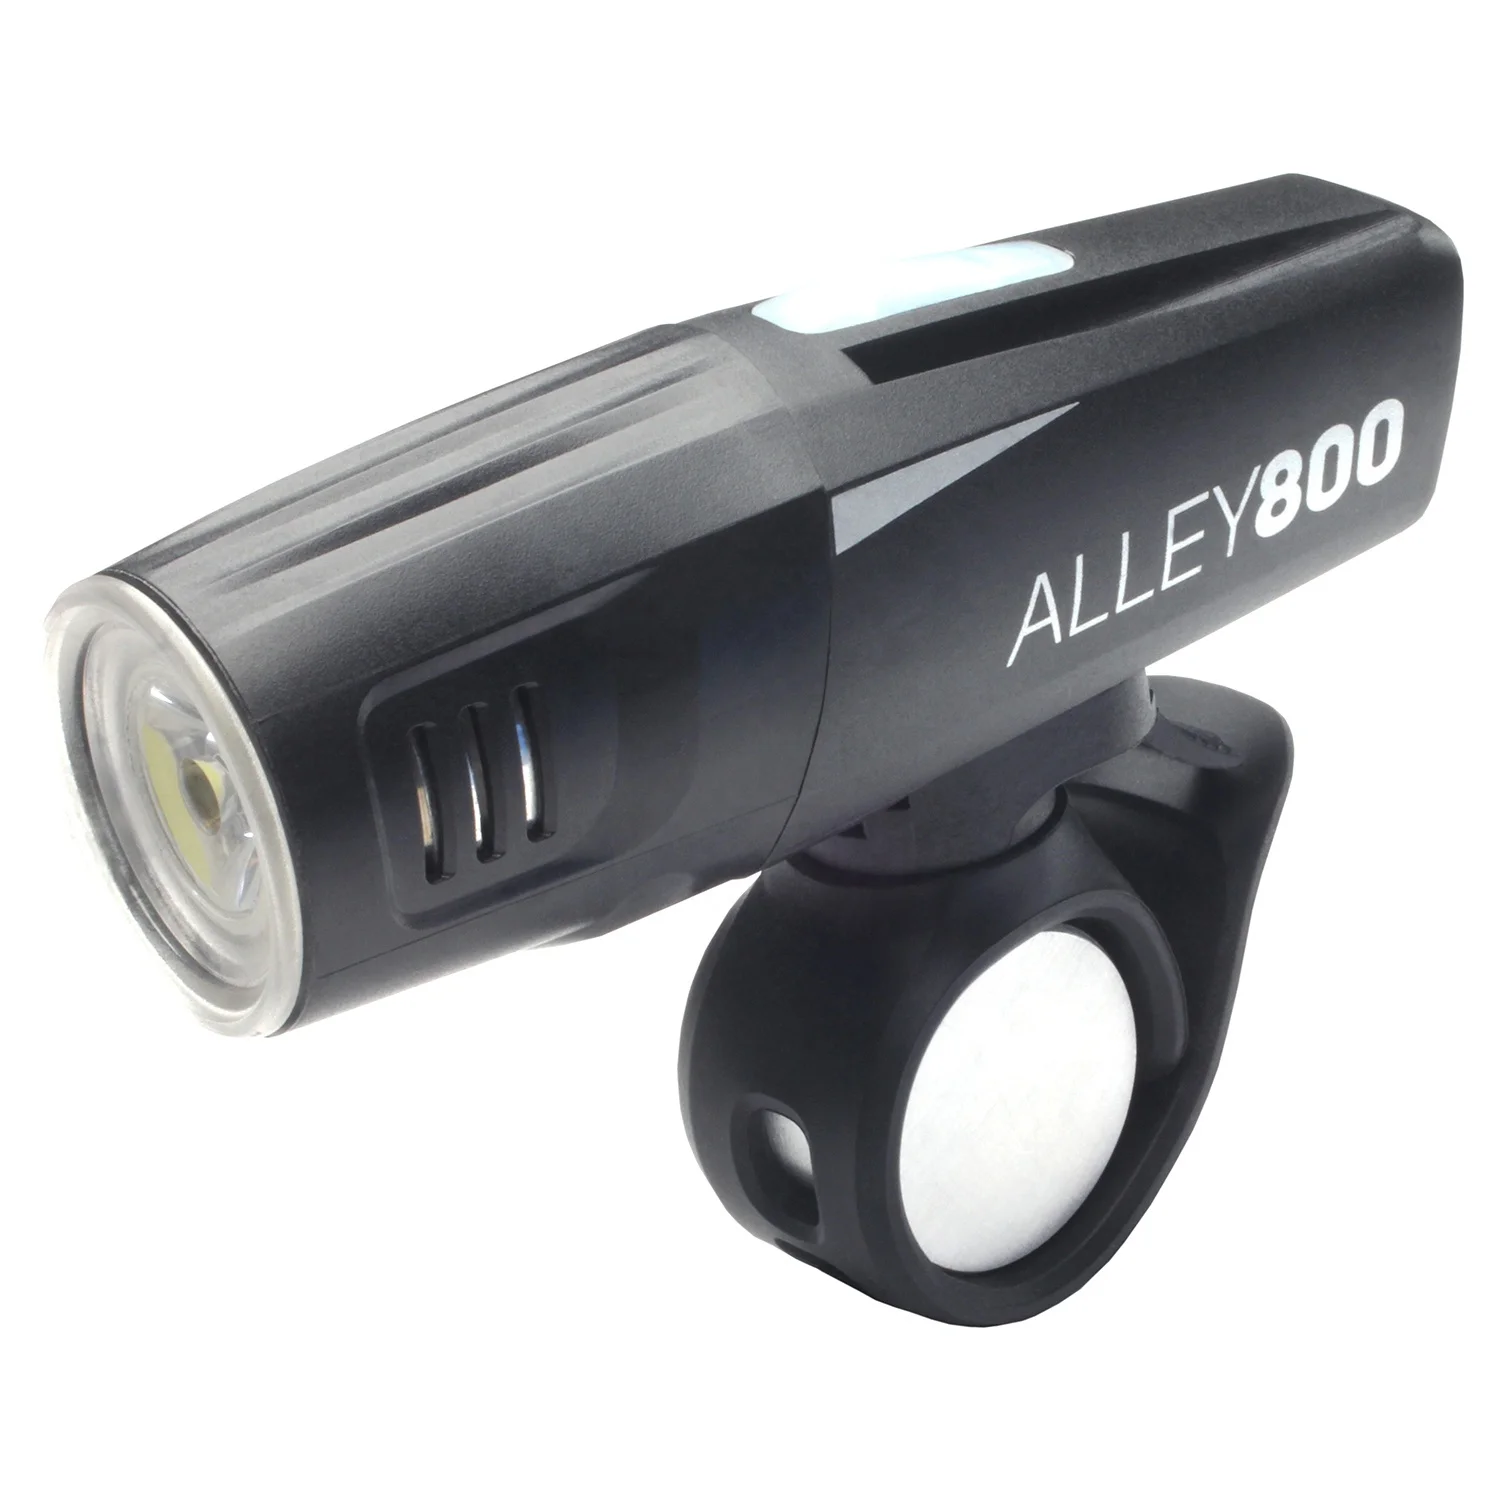 Professional CREE LED USB Rechargeable 800 Lumen Flash Sale Bike Light